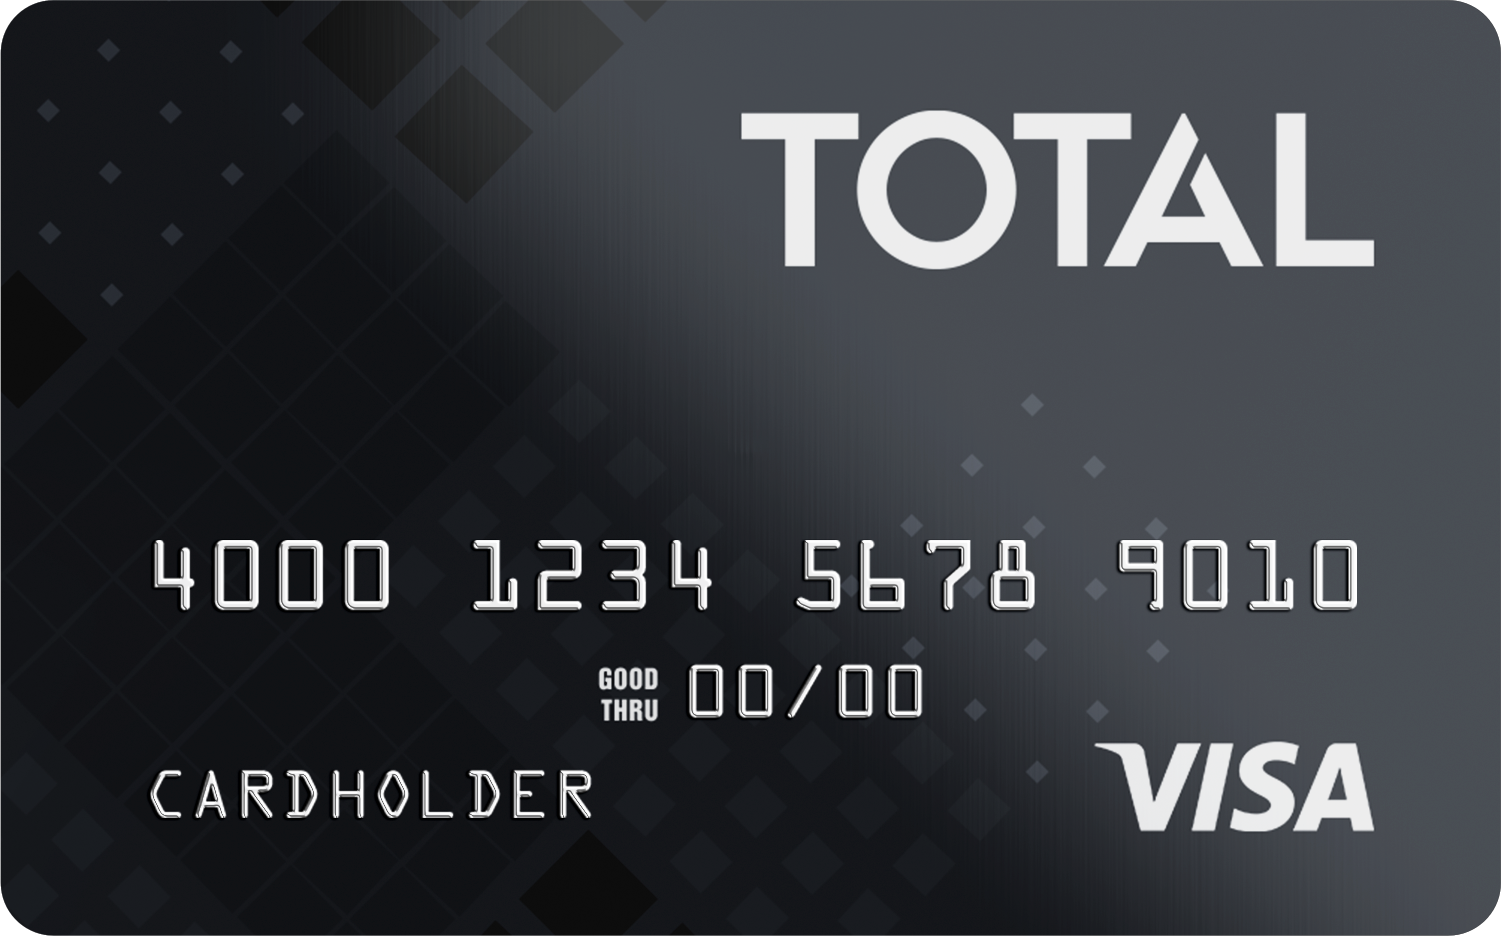 Logotipo total de la tarjeta de crédito Visa